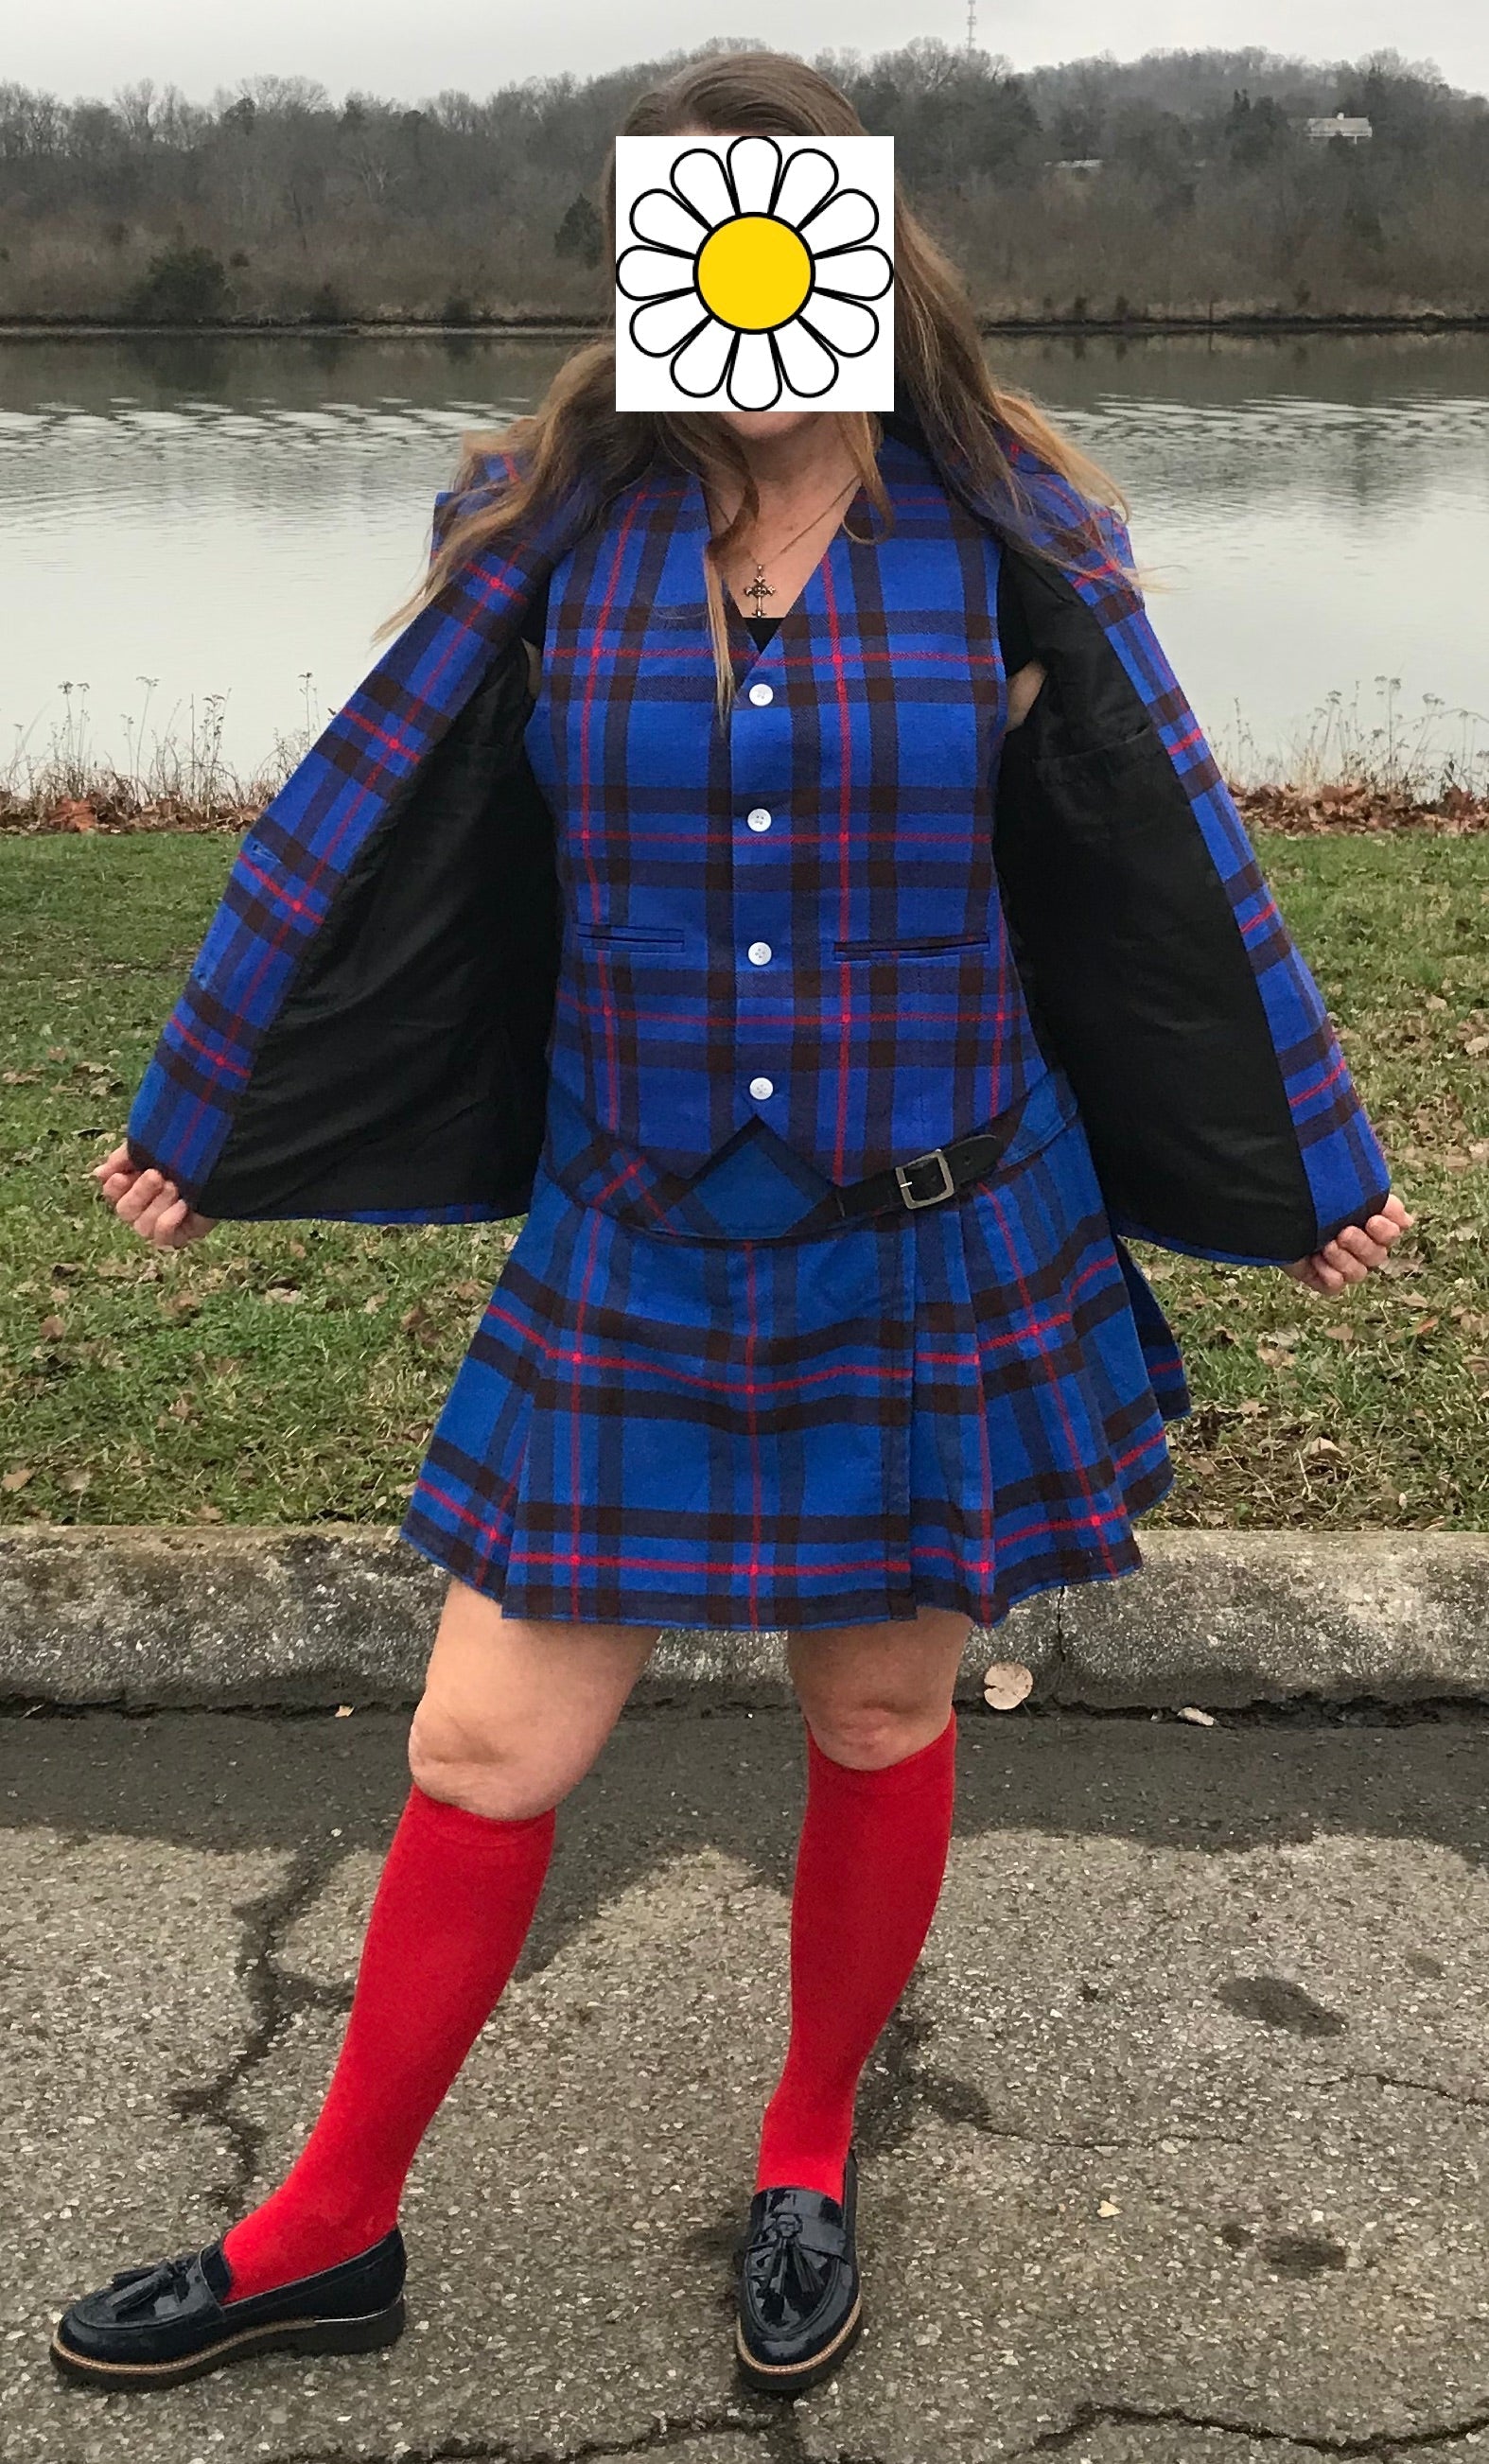 Women's Tartan Skirts & Kilts, Made in Scotland